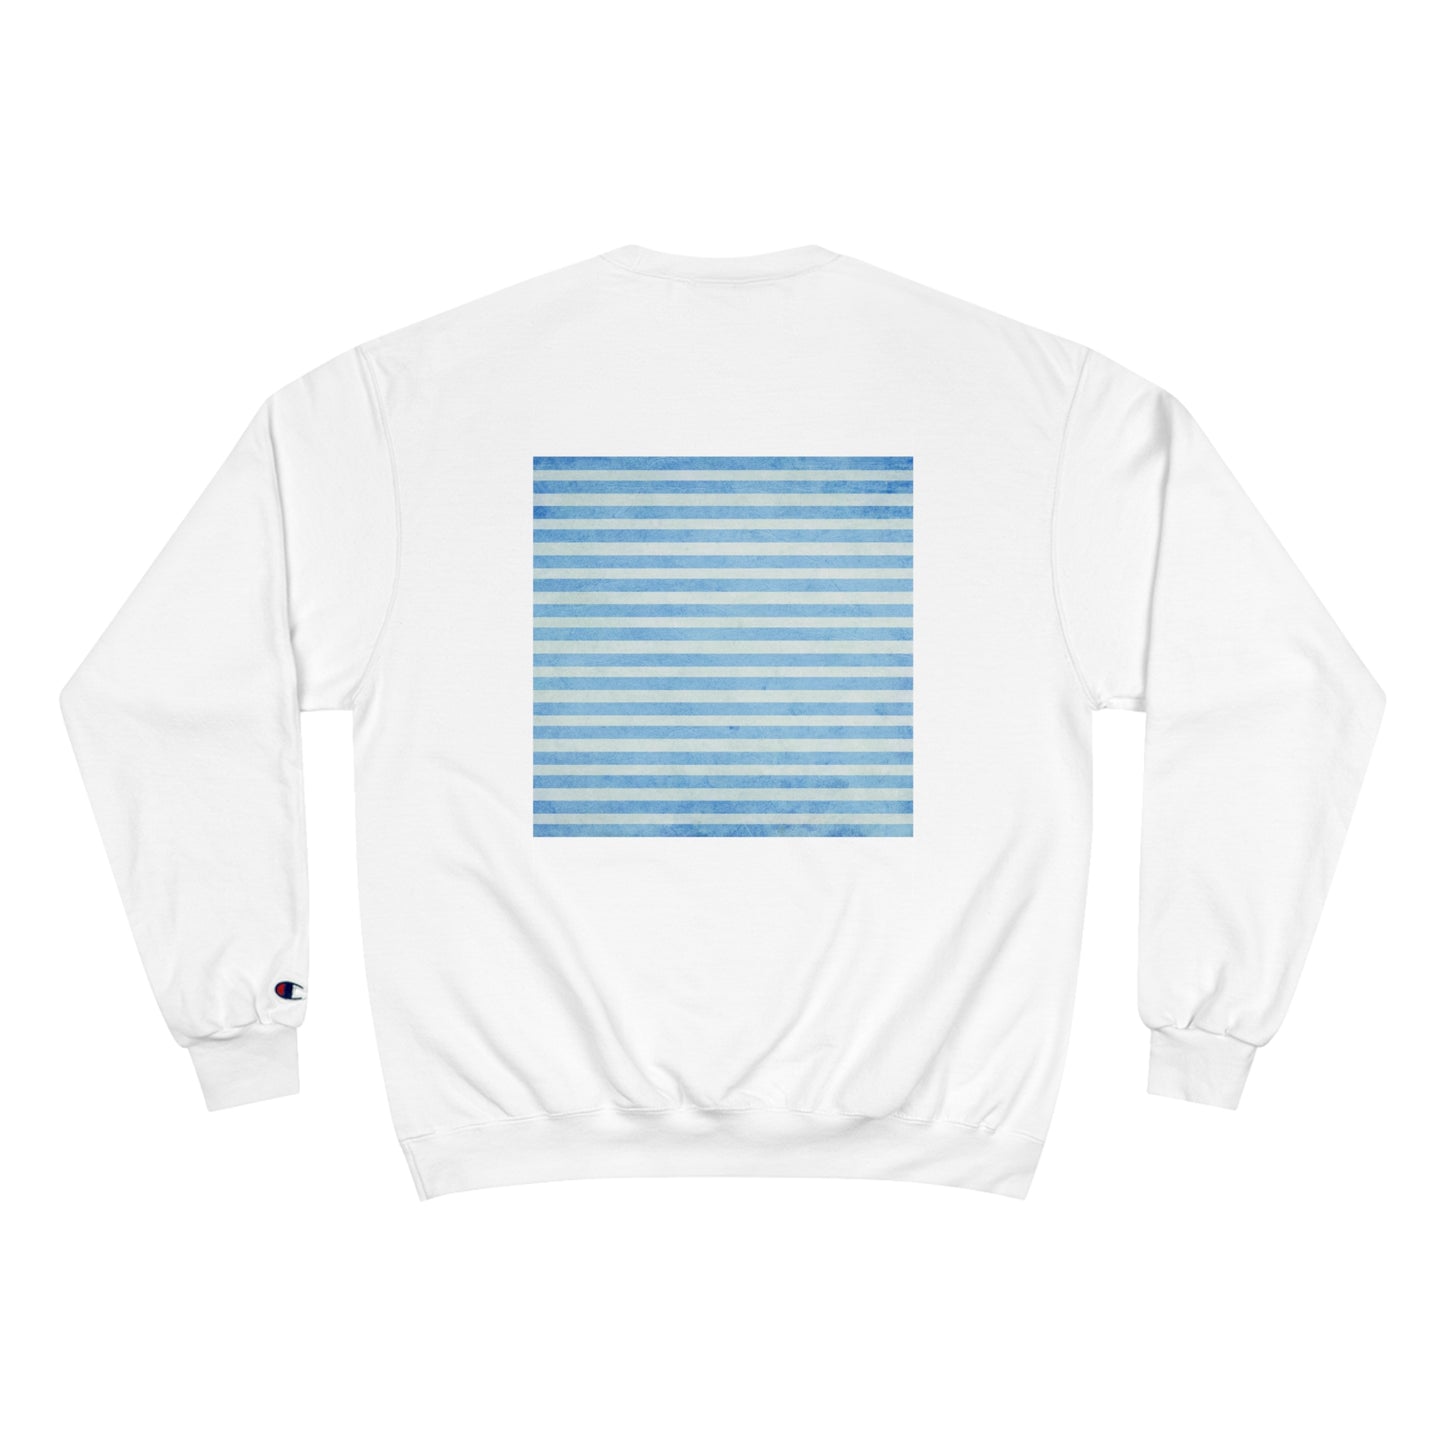 "Stripe Hype" Champion Sweatshirt